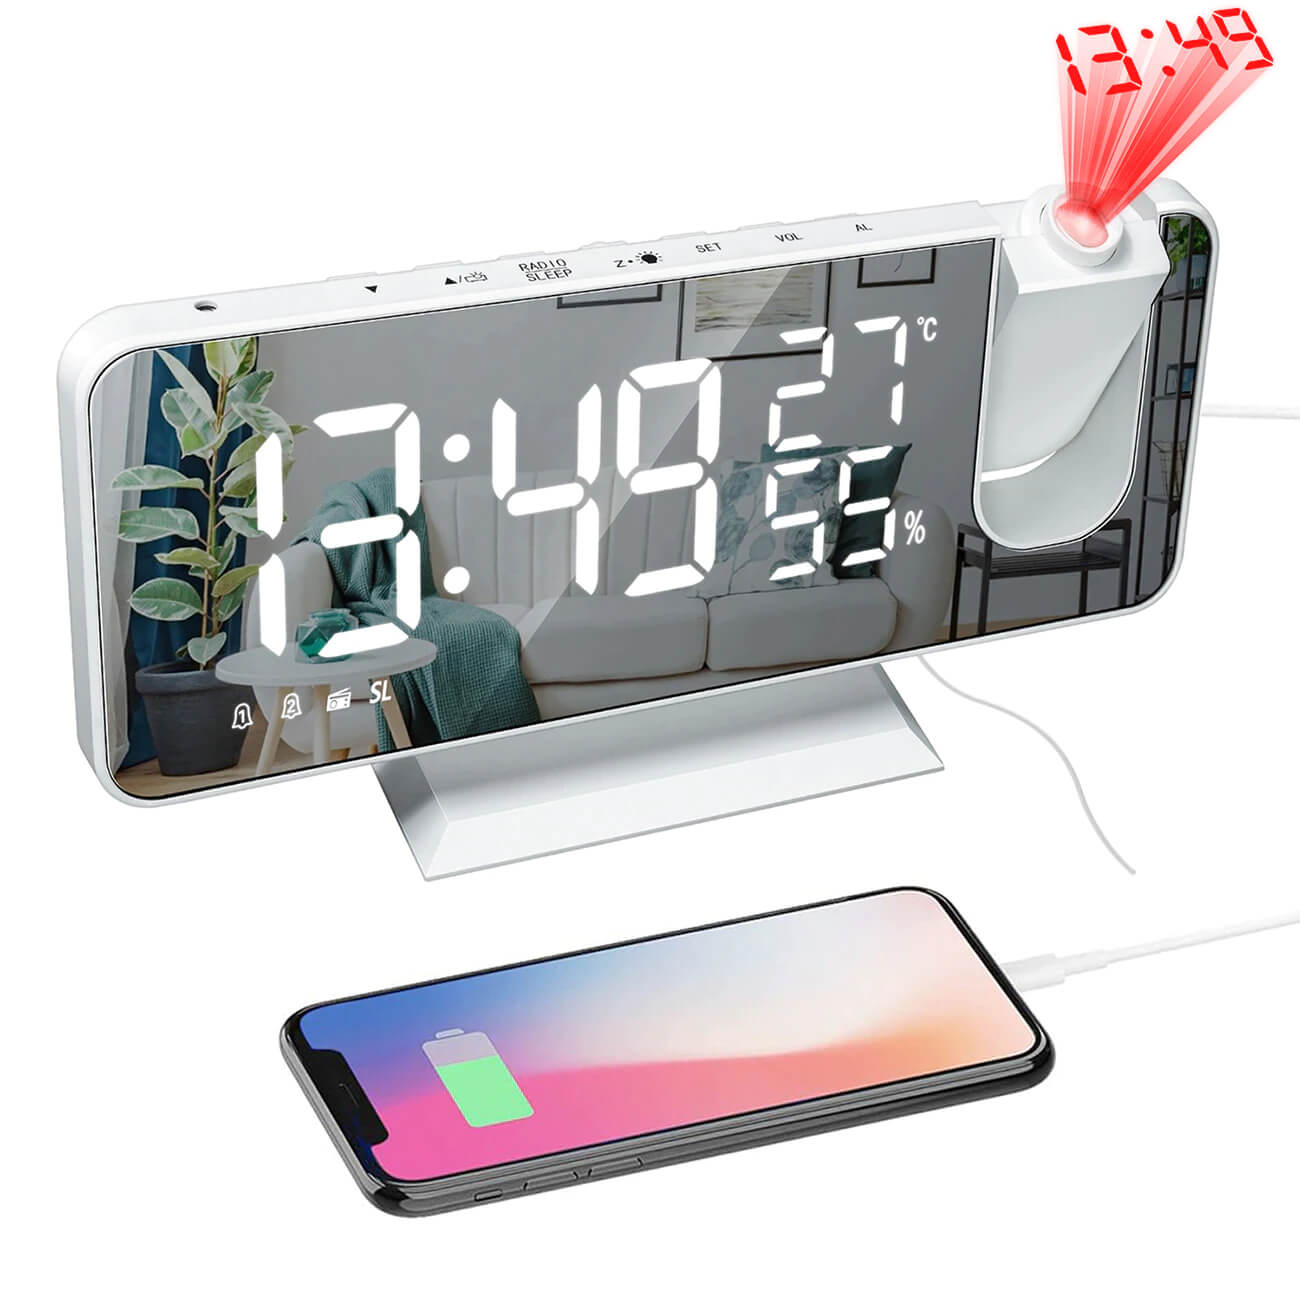 Weta™ LED Digital Clock